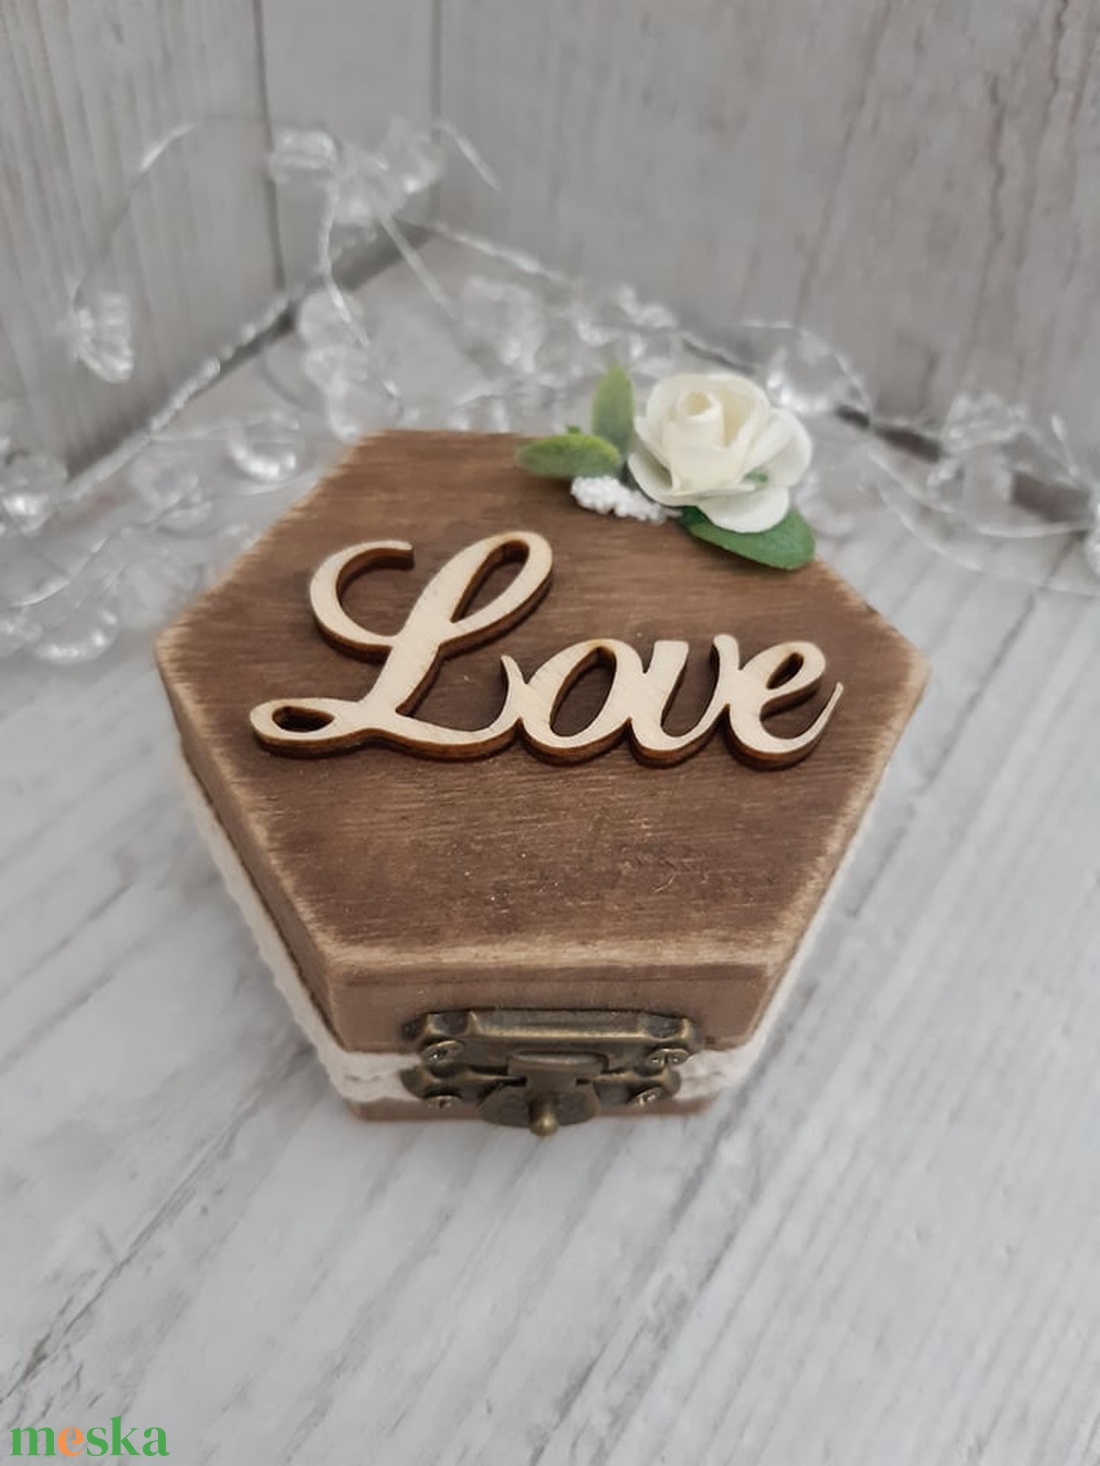 Romantikus, vintage hangulatú gyűrűtartó doboz esküvői ceremóniára, eljegyzésre, lánykérésre! - esküvő - kiegészítők - gyűrűtartó & gyűrűpárna - Meska.hu